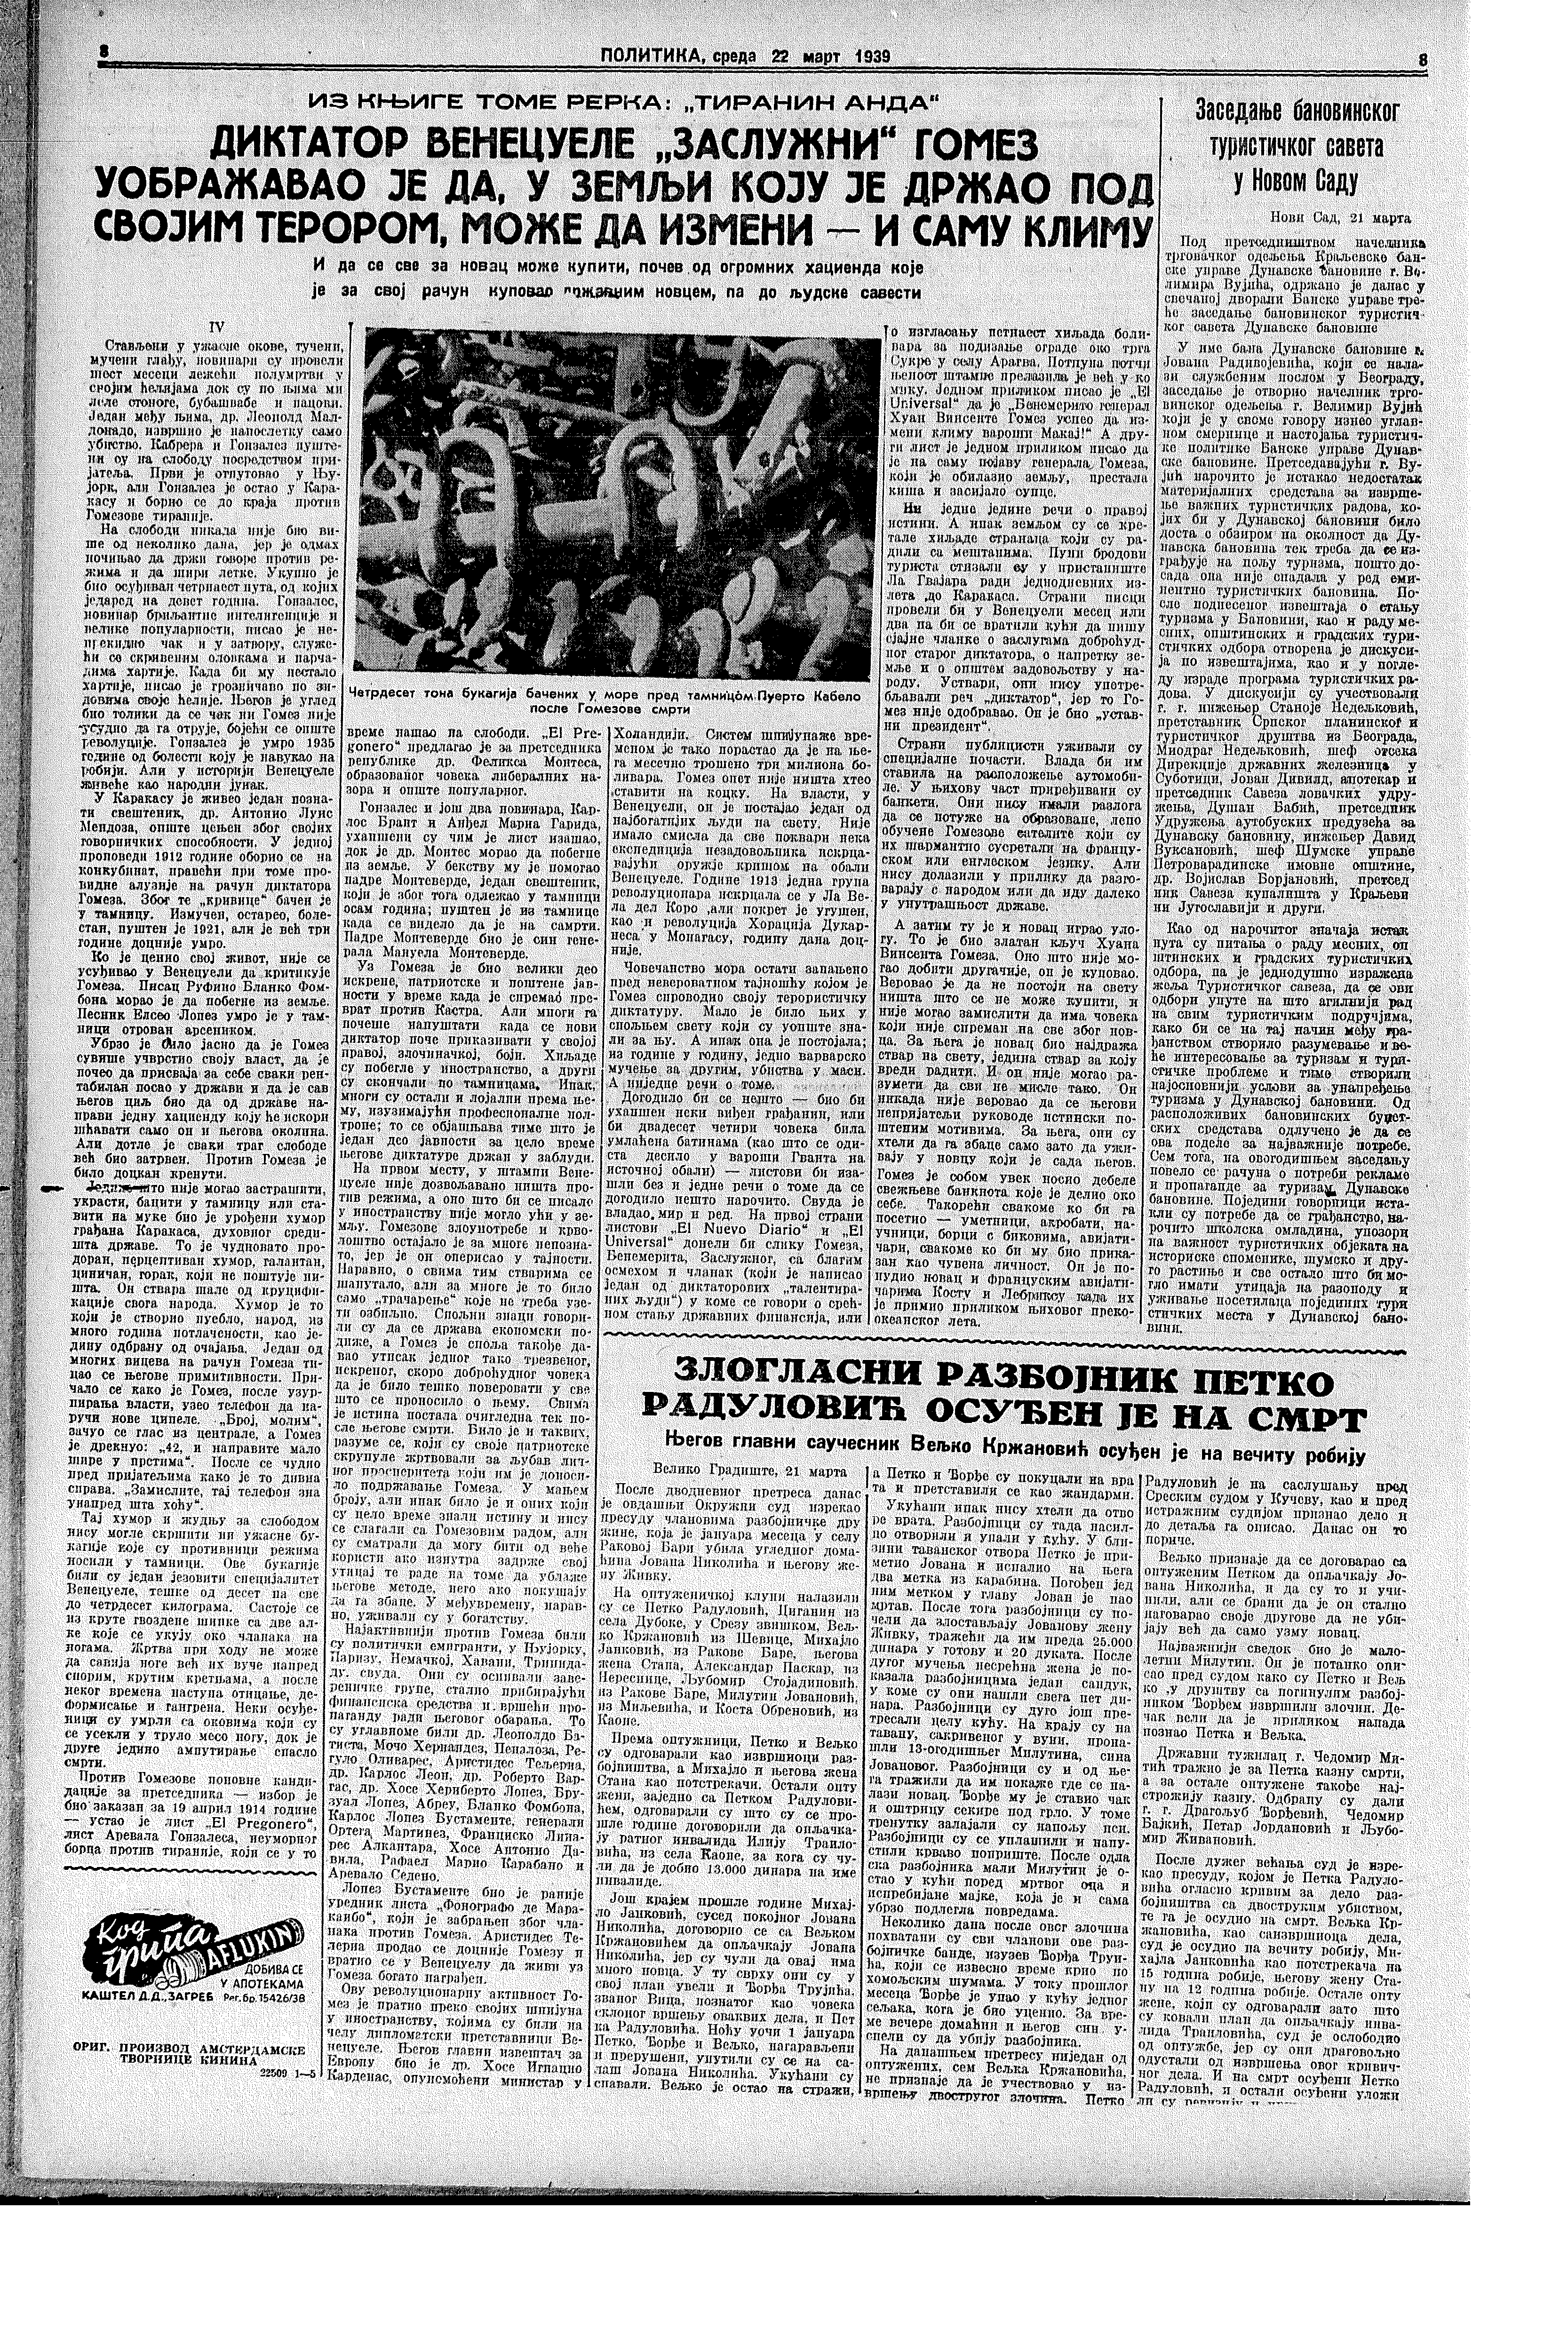 Zloglasni razbojnik osuđen na smrt, Politika, 22.03.1939.